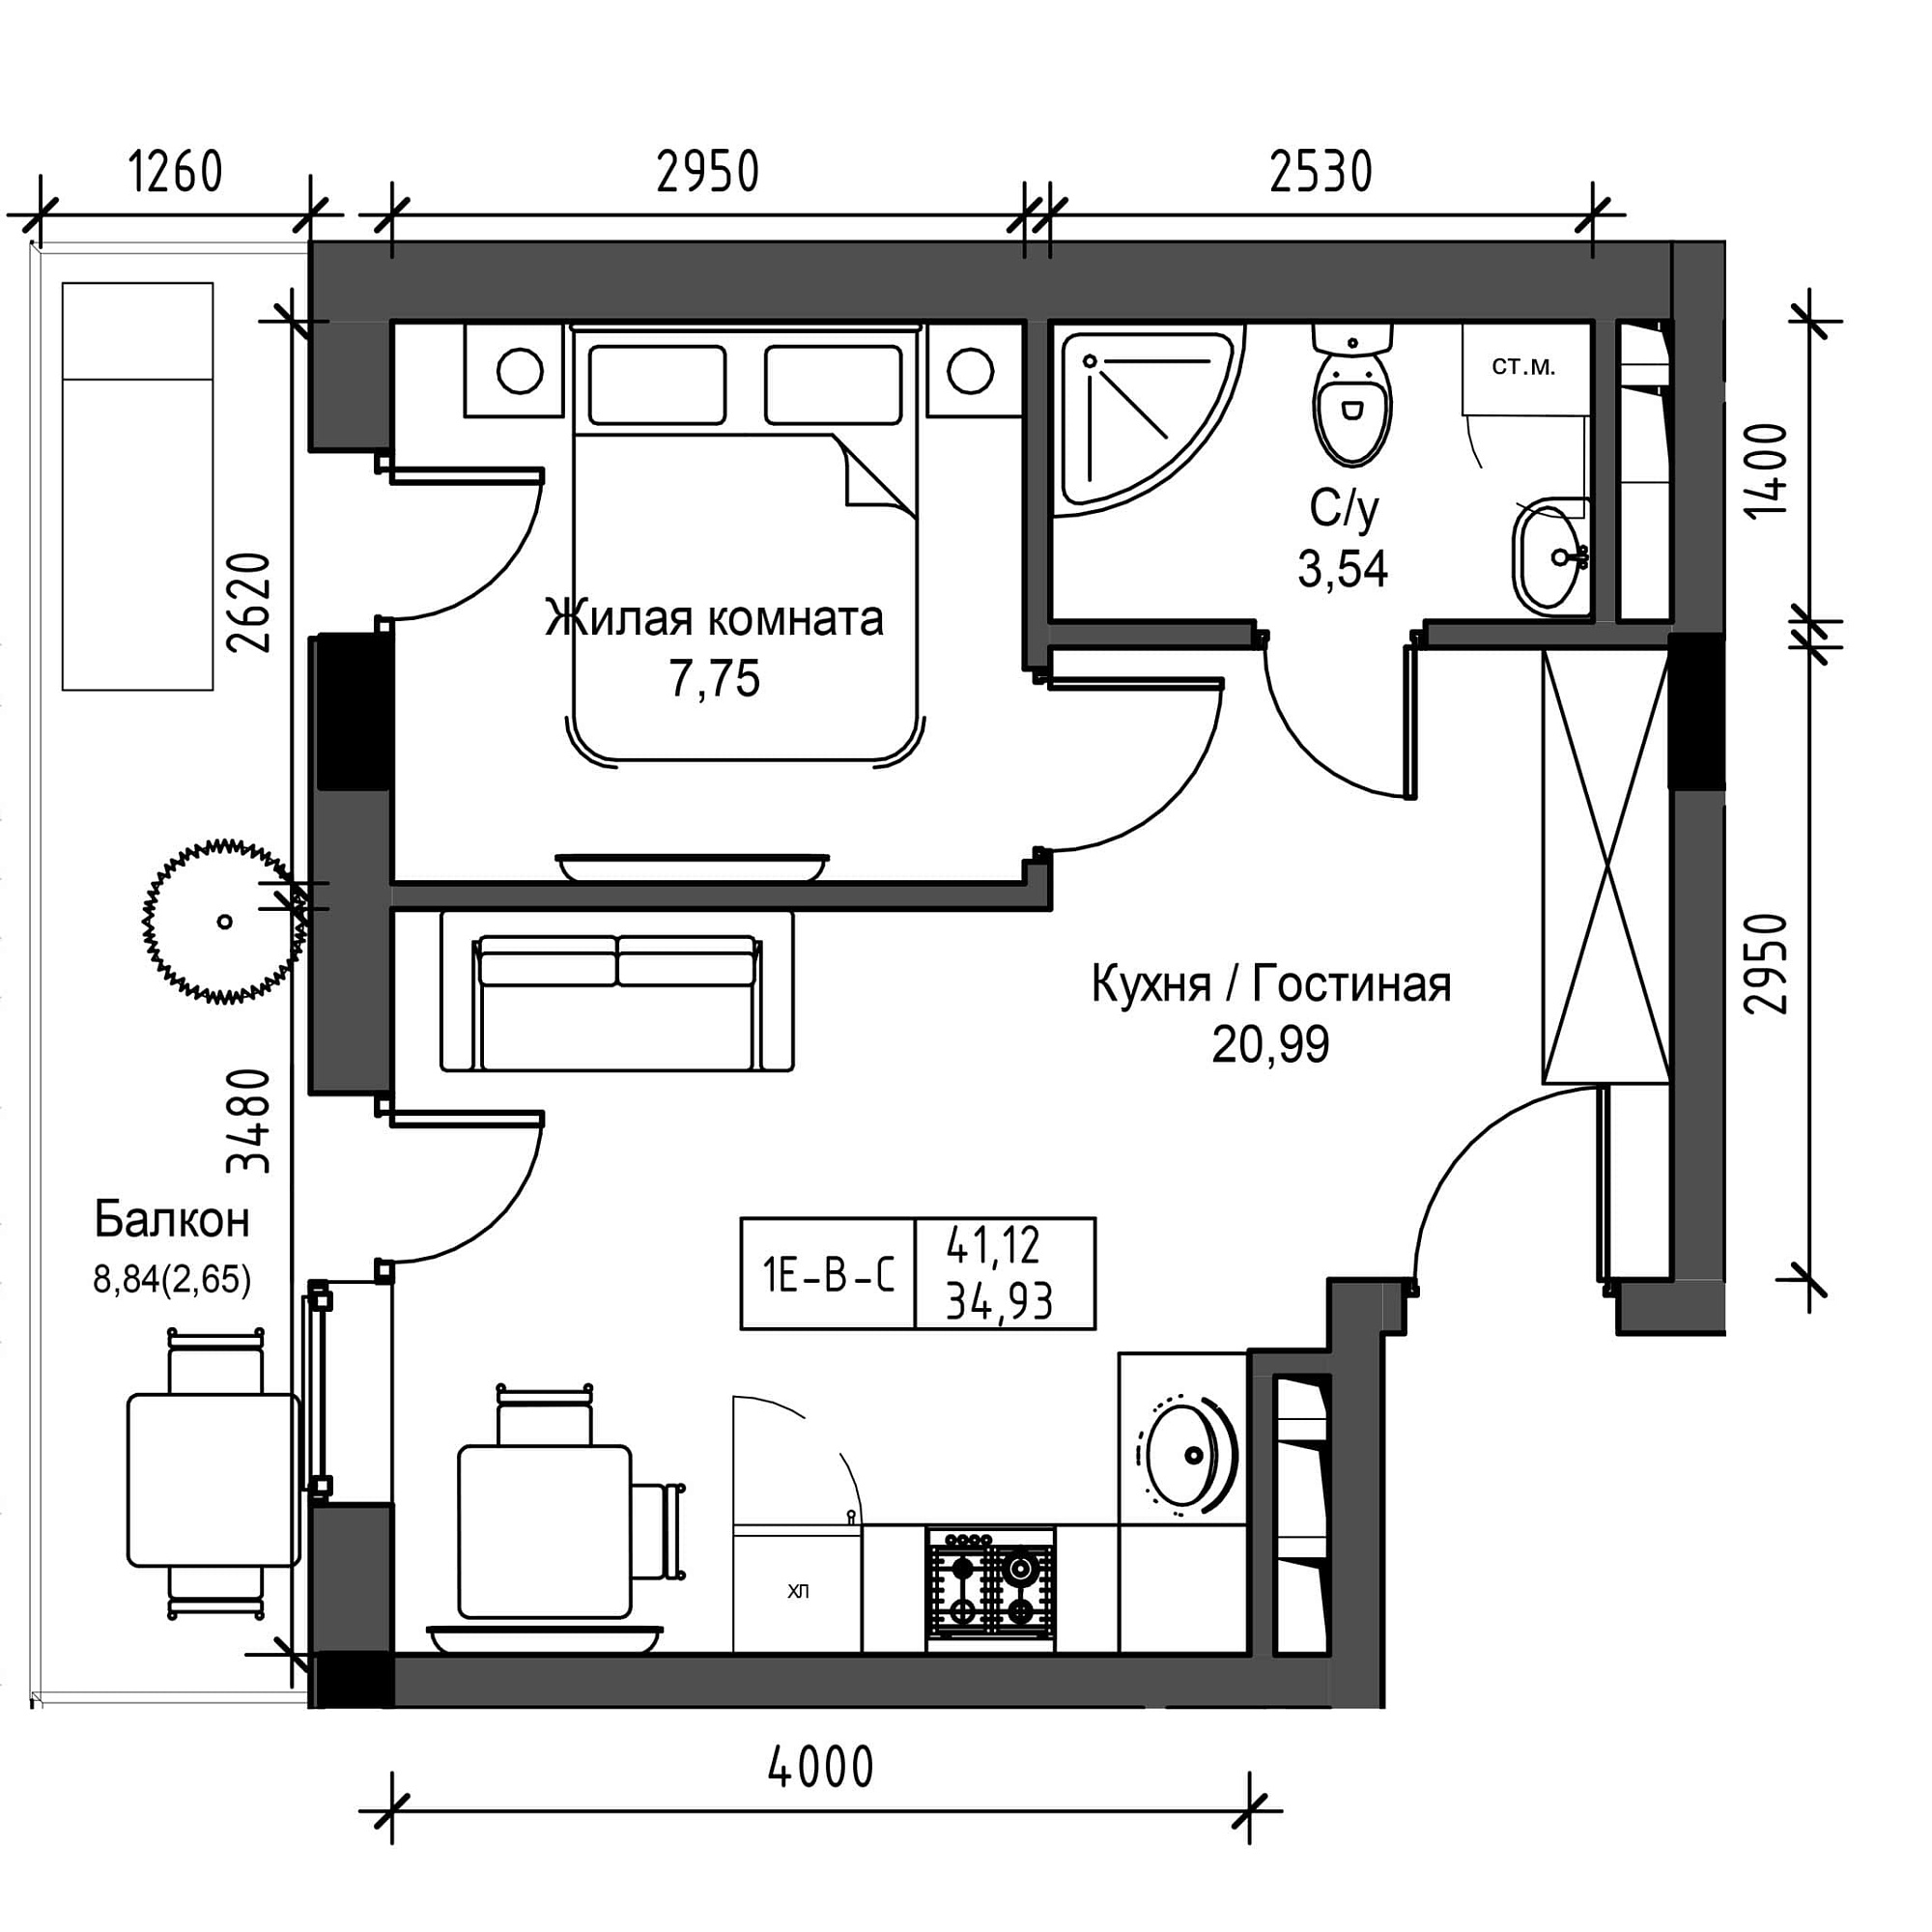 Планування 1-к квартира площею 34.93м2, UM-001-06/0020.